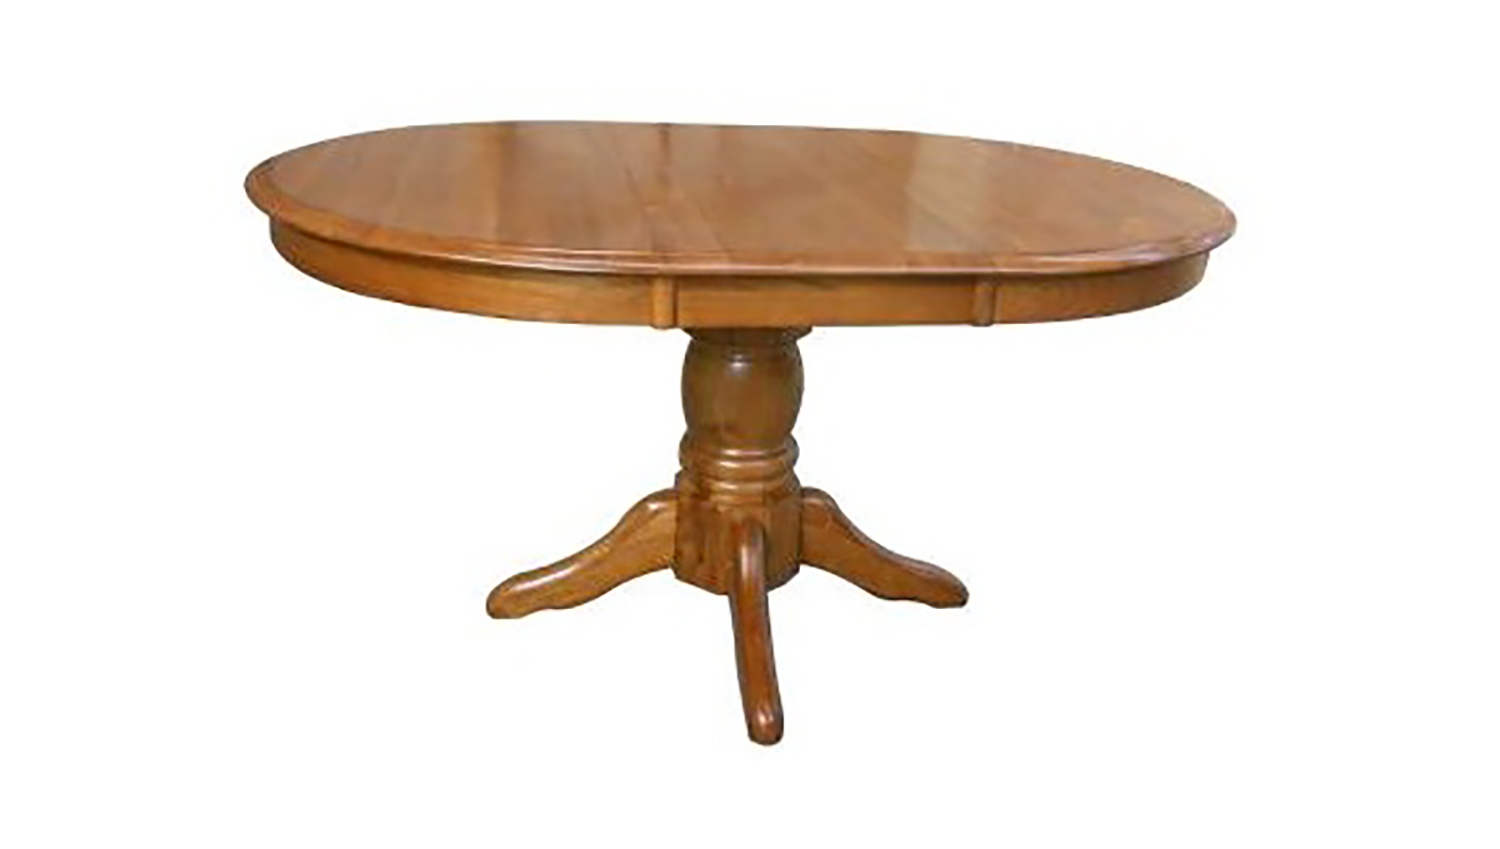 Chelsea Home Lacewood 30-inch High Pedestal Table - Medium Oak